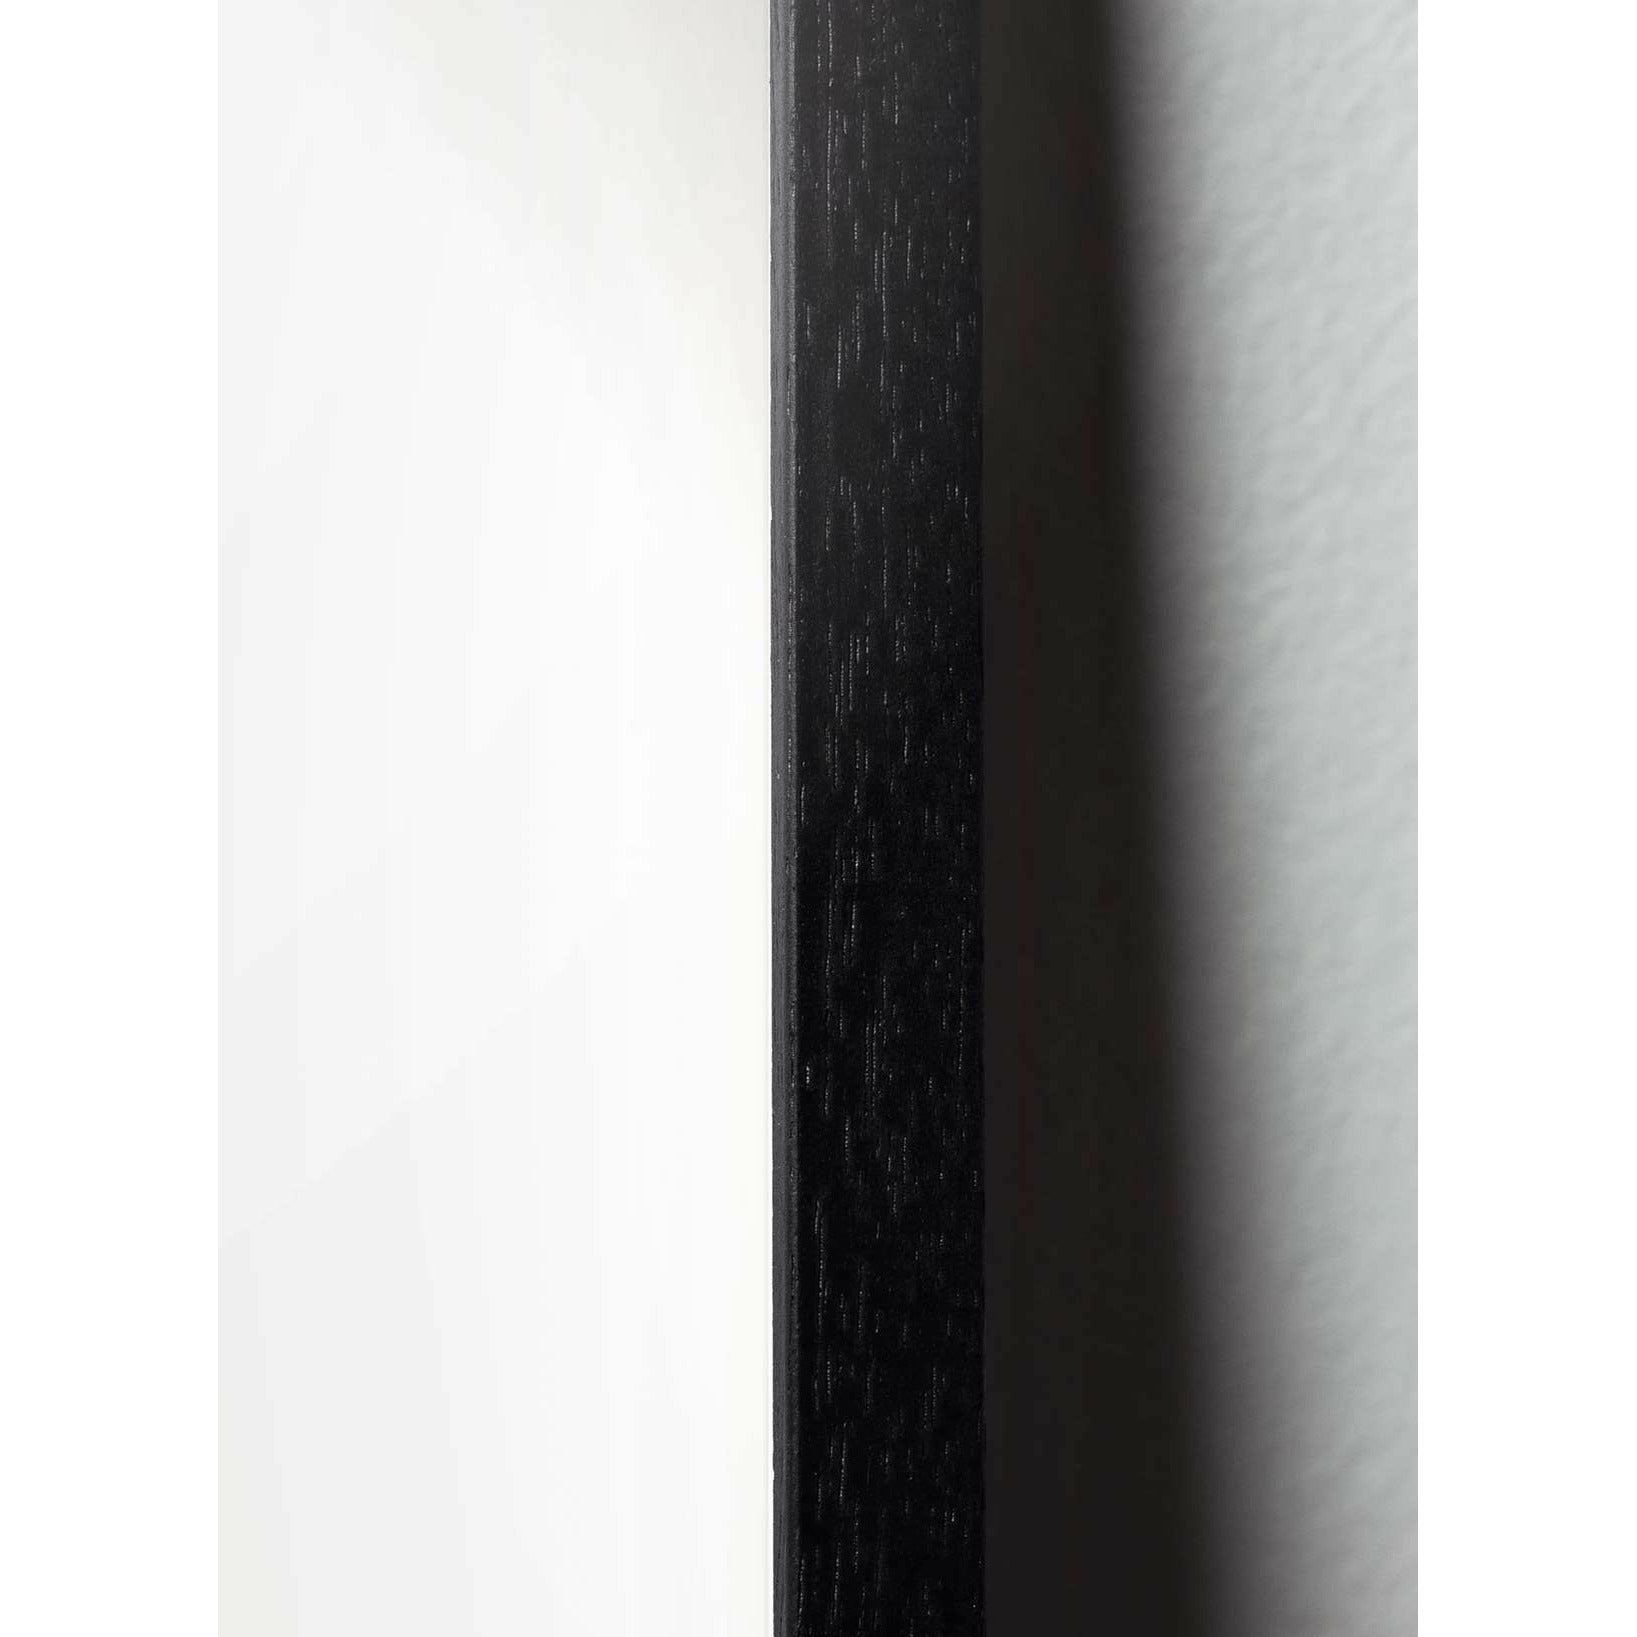 Póster de icono de diseño de caída de creación, marco hecho de madera lacada negra de 70 x100 cm, púrpura